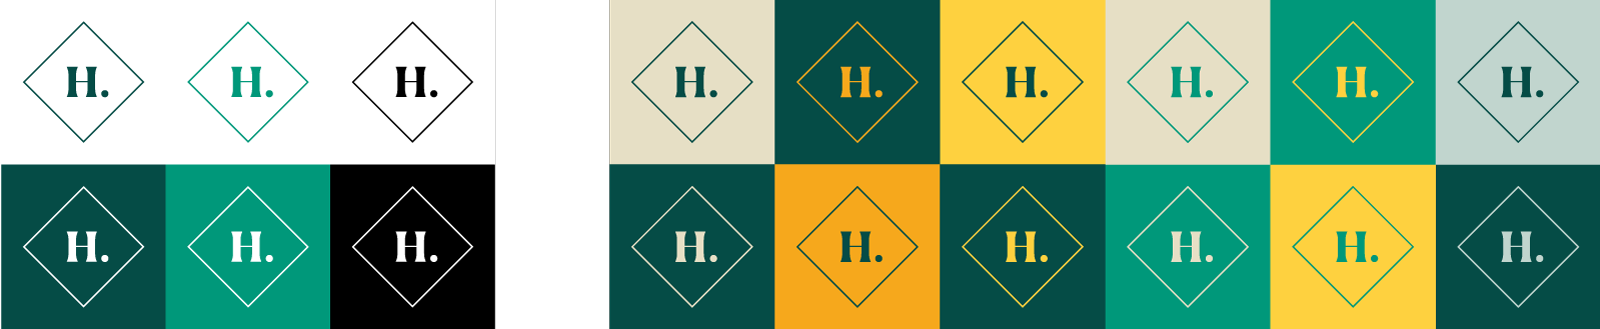 grid of diamond H logomark colors